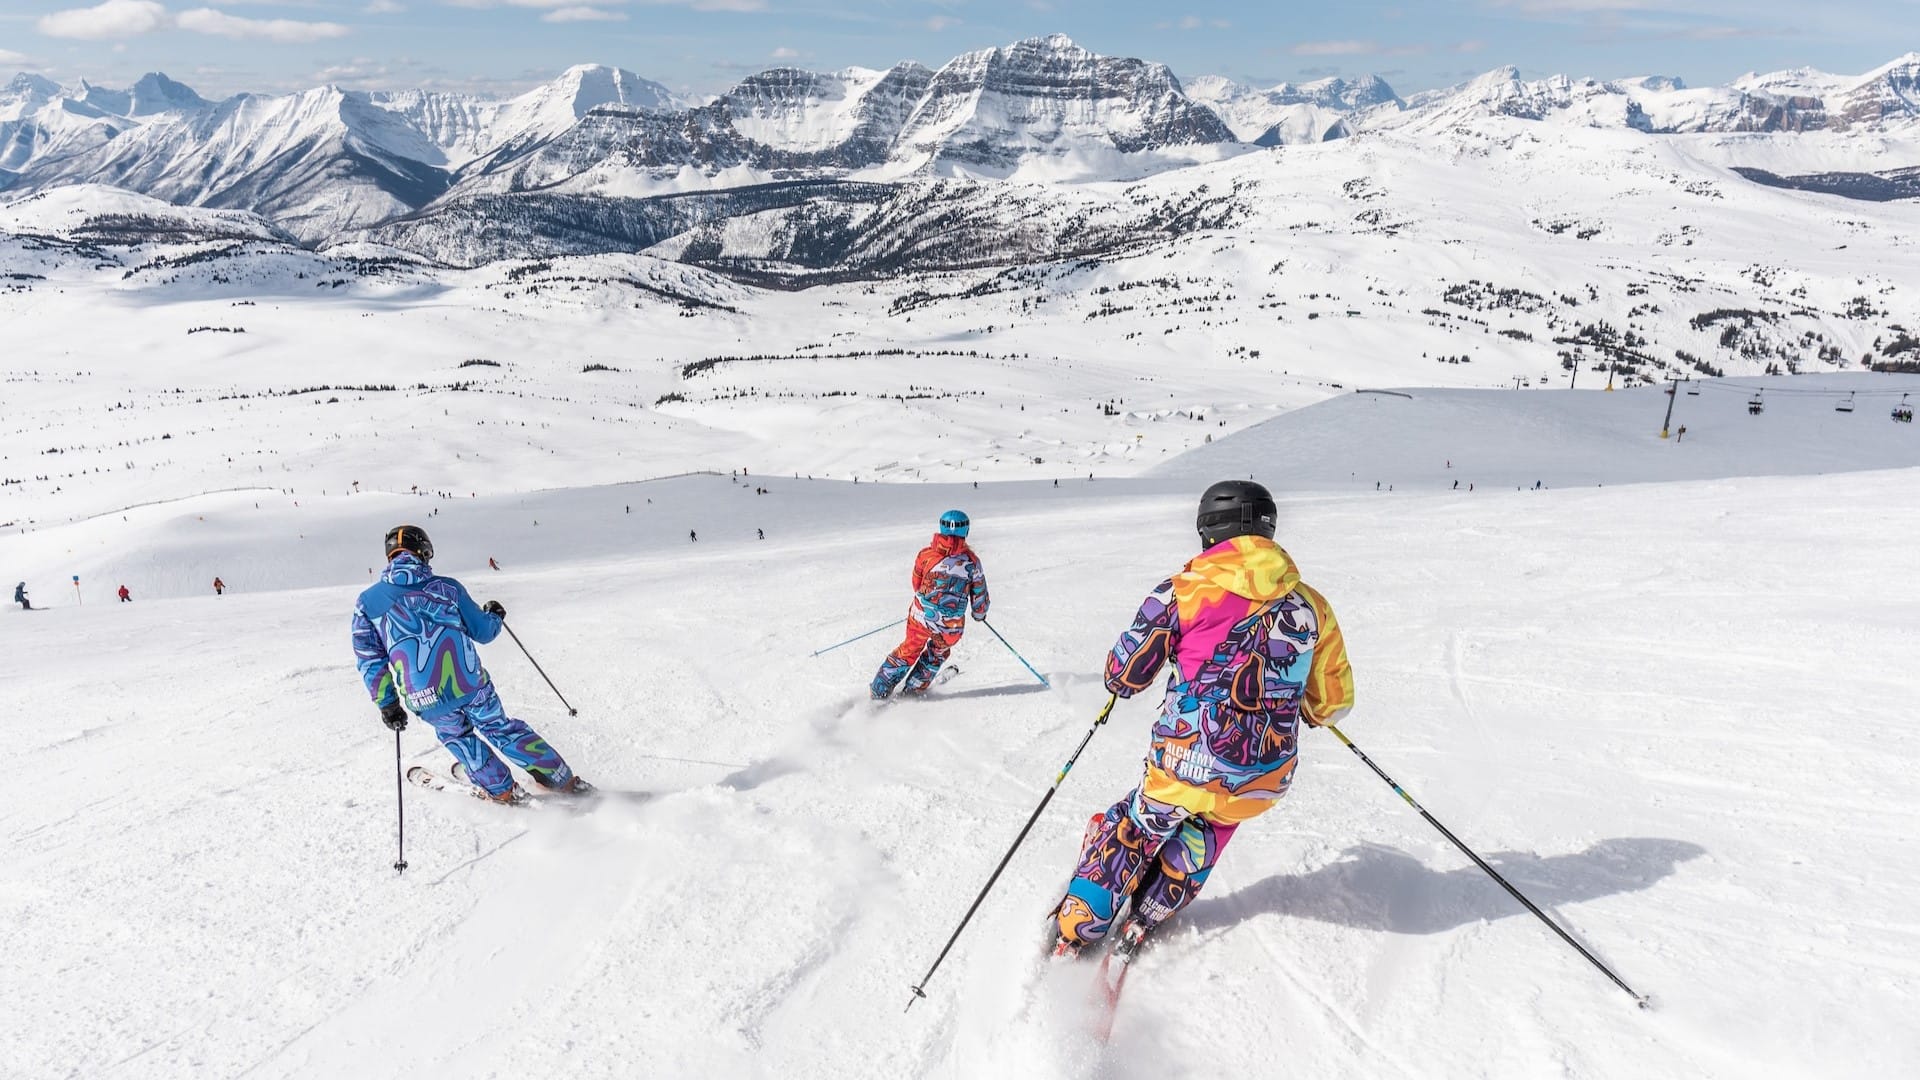 Image: Three skiiers making their way down a ski slope.